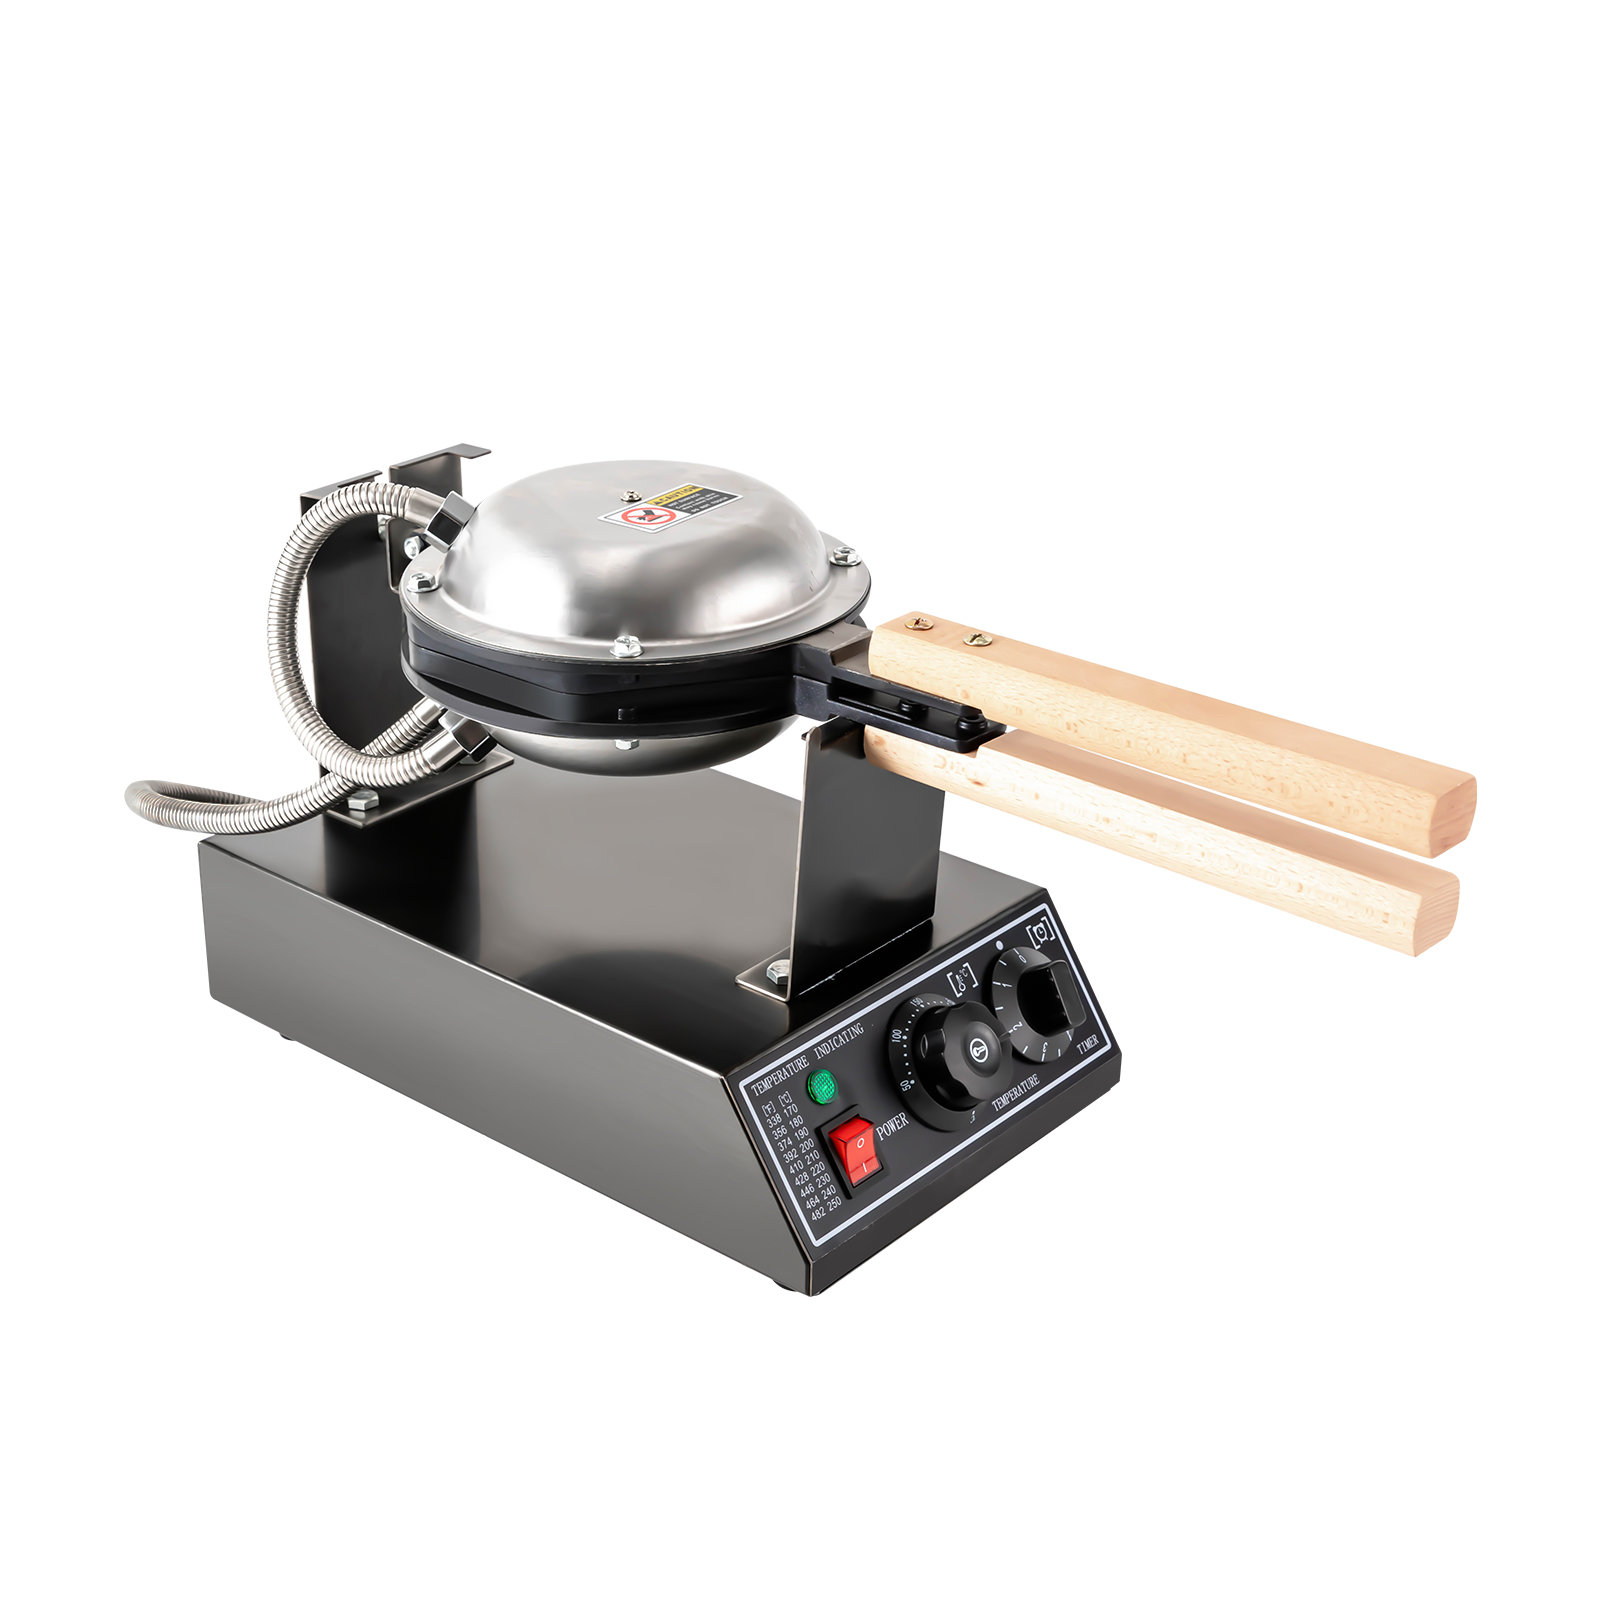 New 1400W Nonstick Electric Bubble Waffle Maker Stainless Pancake Maker  Machine